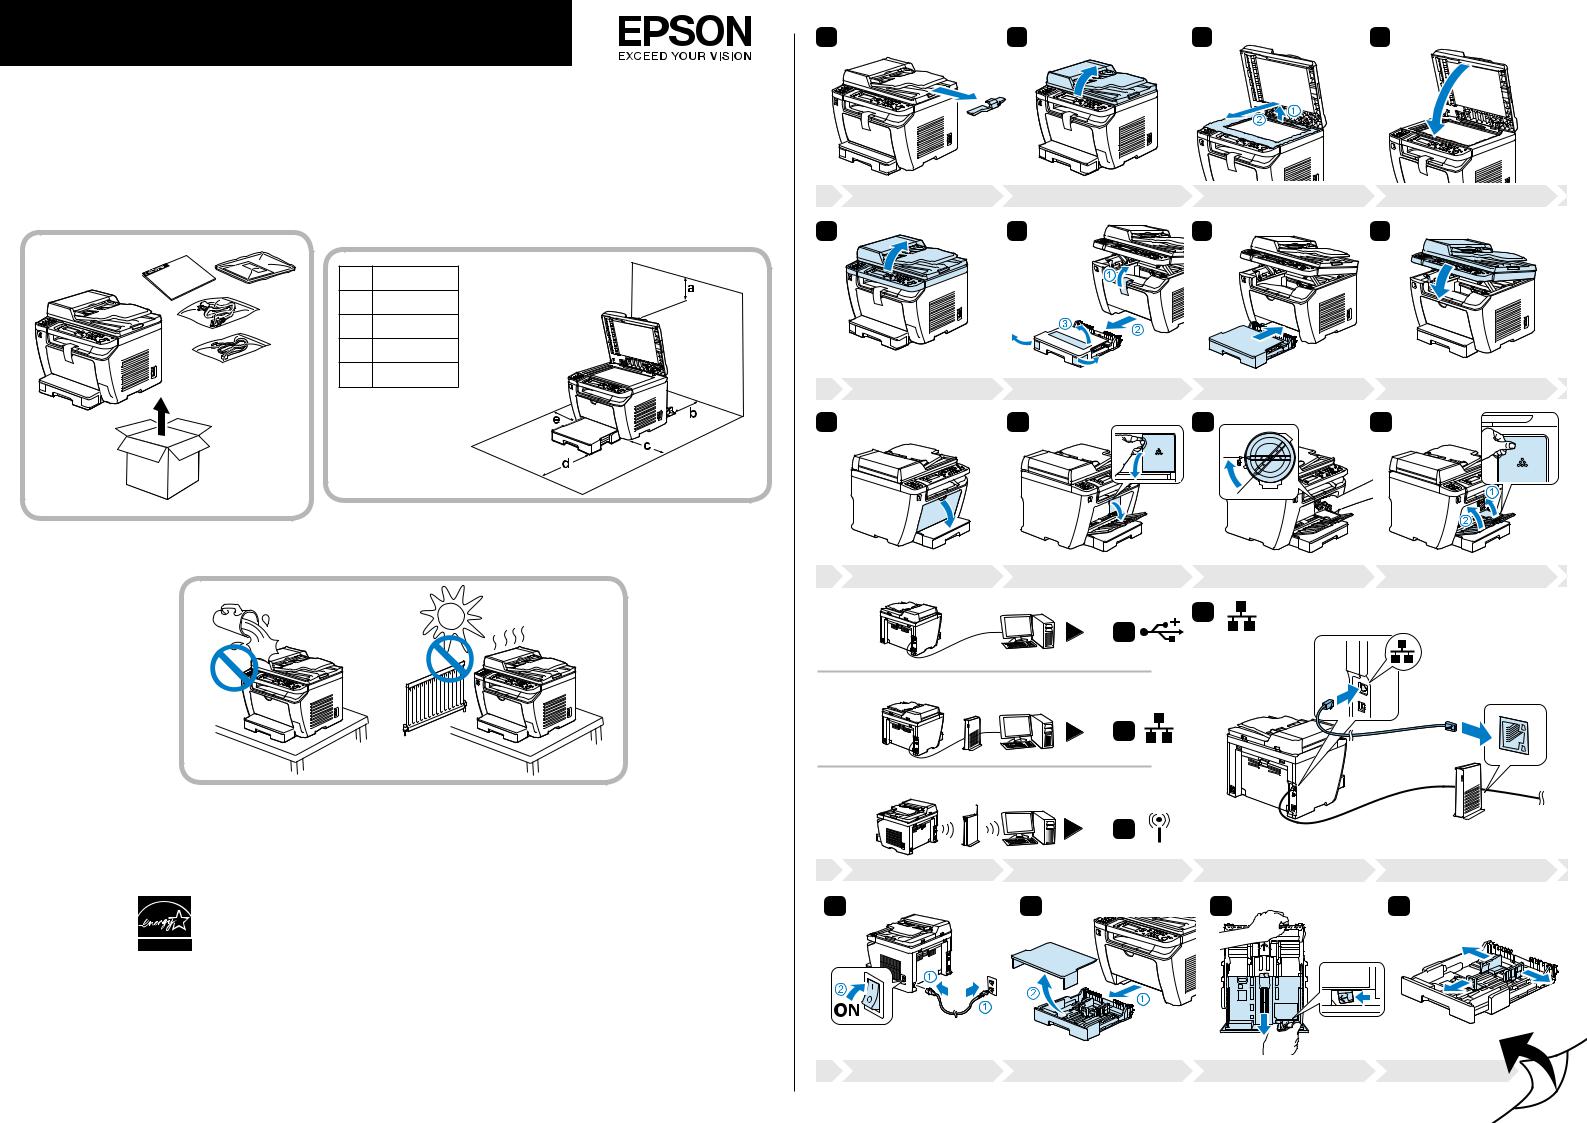 Epson AL-MX200 series setup manual